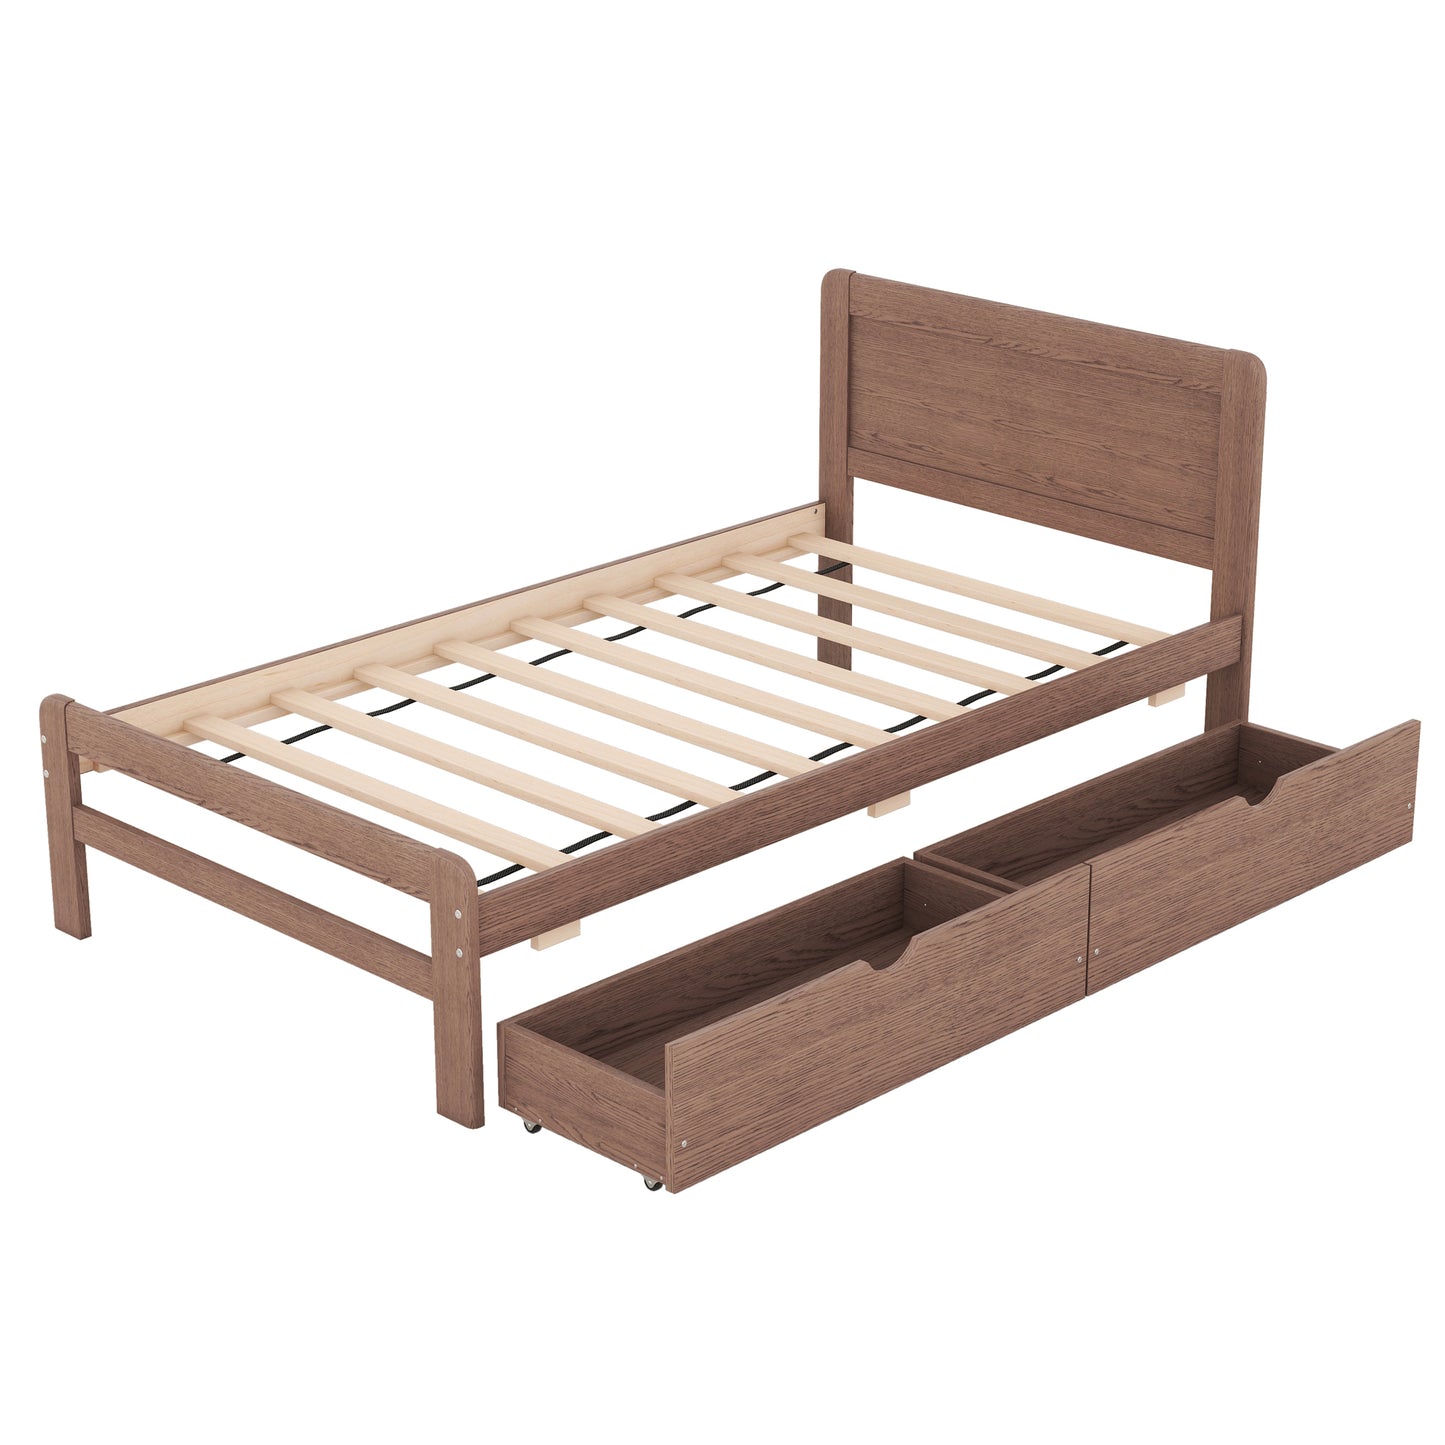 Modern Design Twin Size Platform Bed Frame with 2 Drawers for Walnut Color